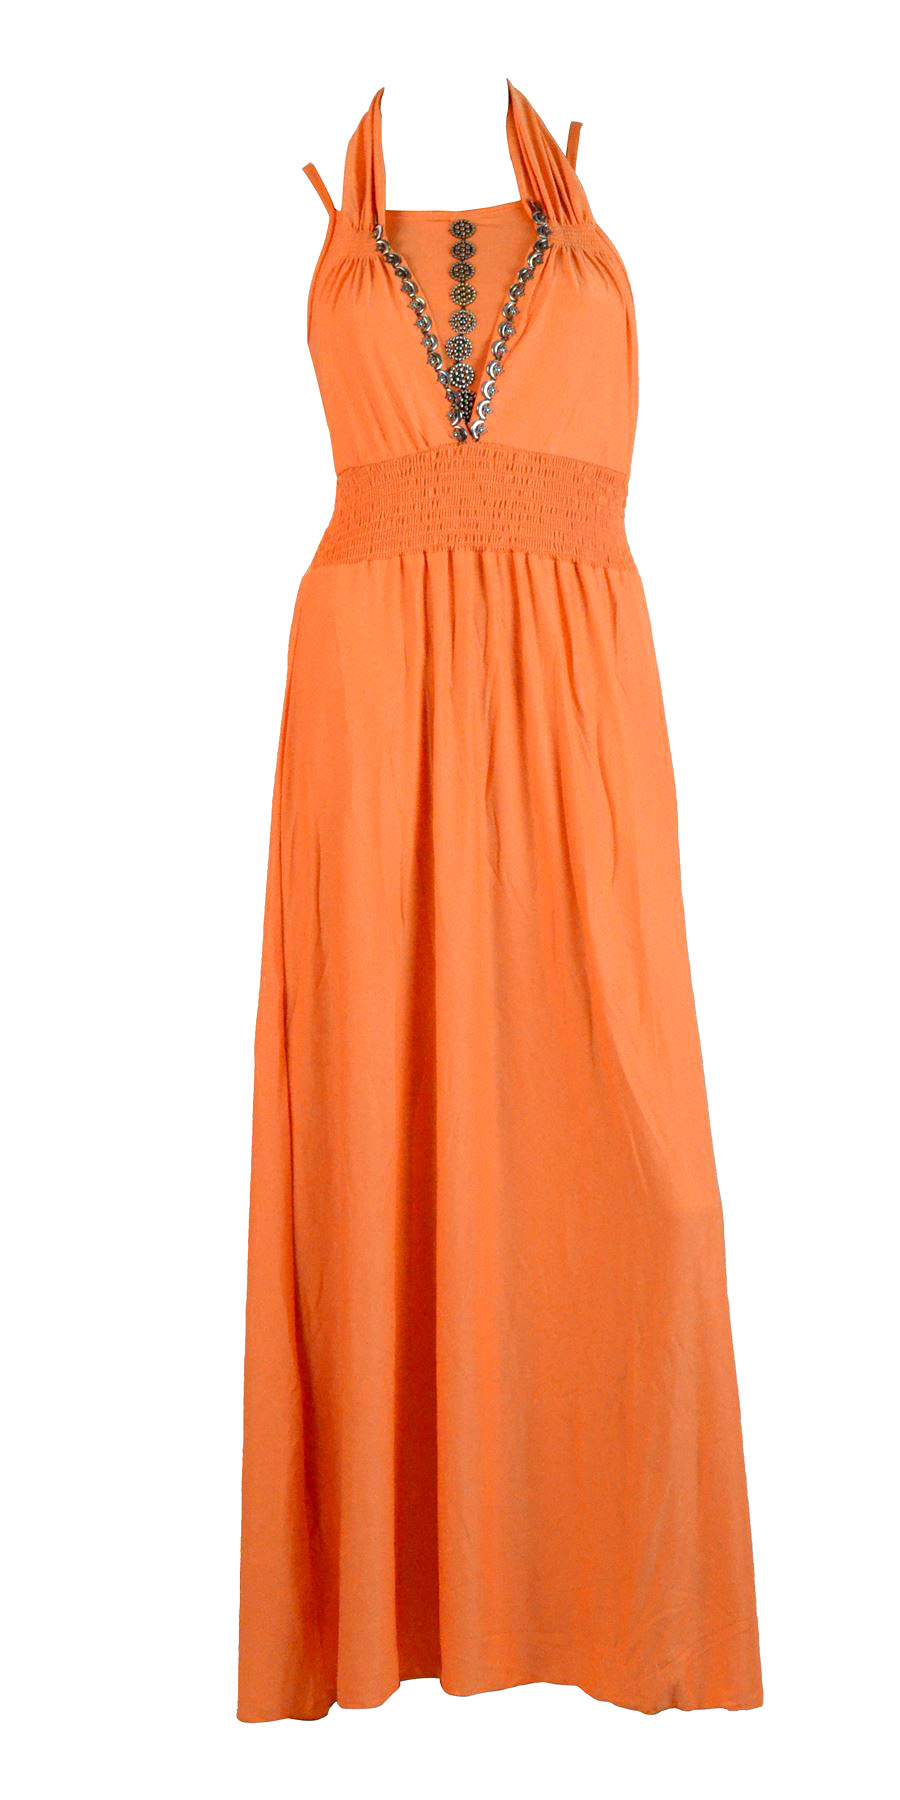 Belle Donne- Womenâ€TMs Maxi Dress Sleeveless Halter Top Solid Colors Long Dress - Orange